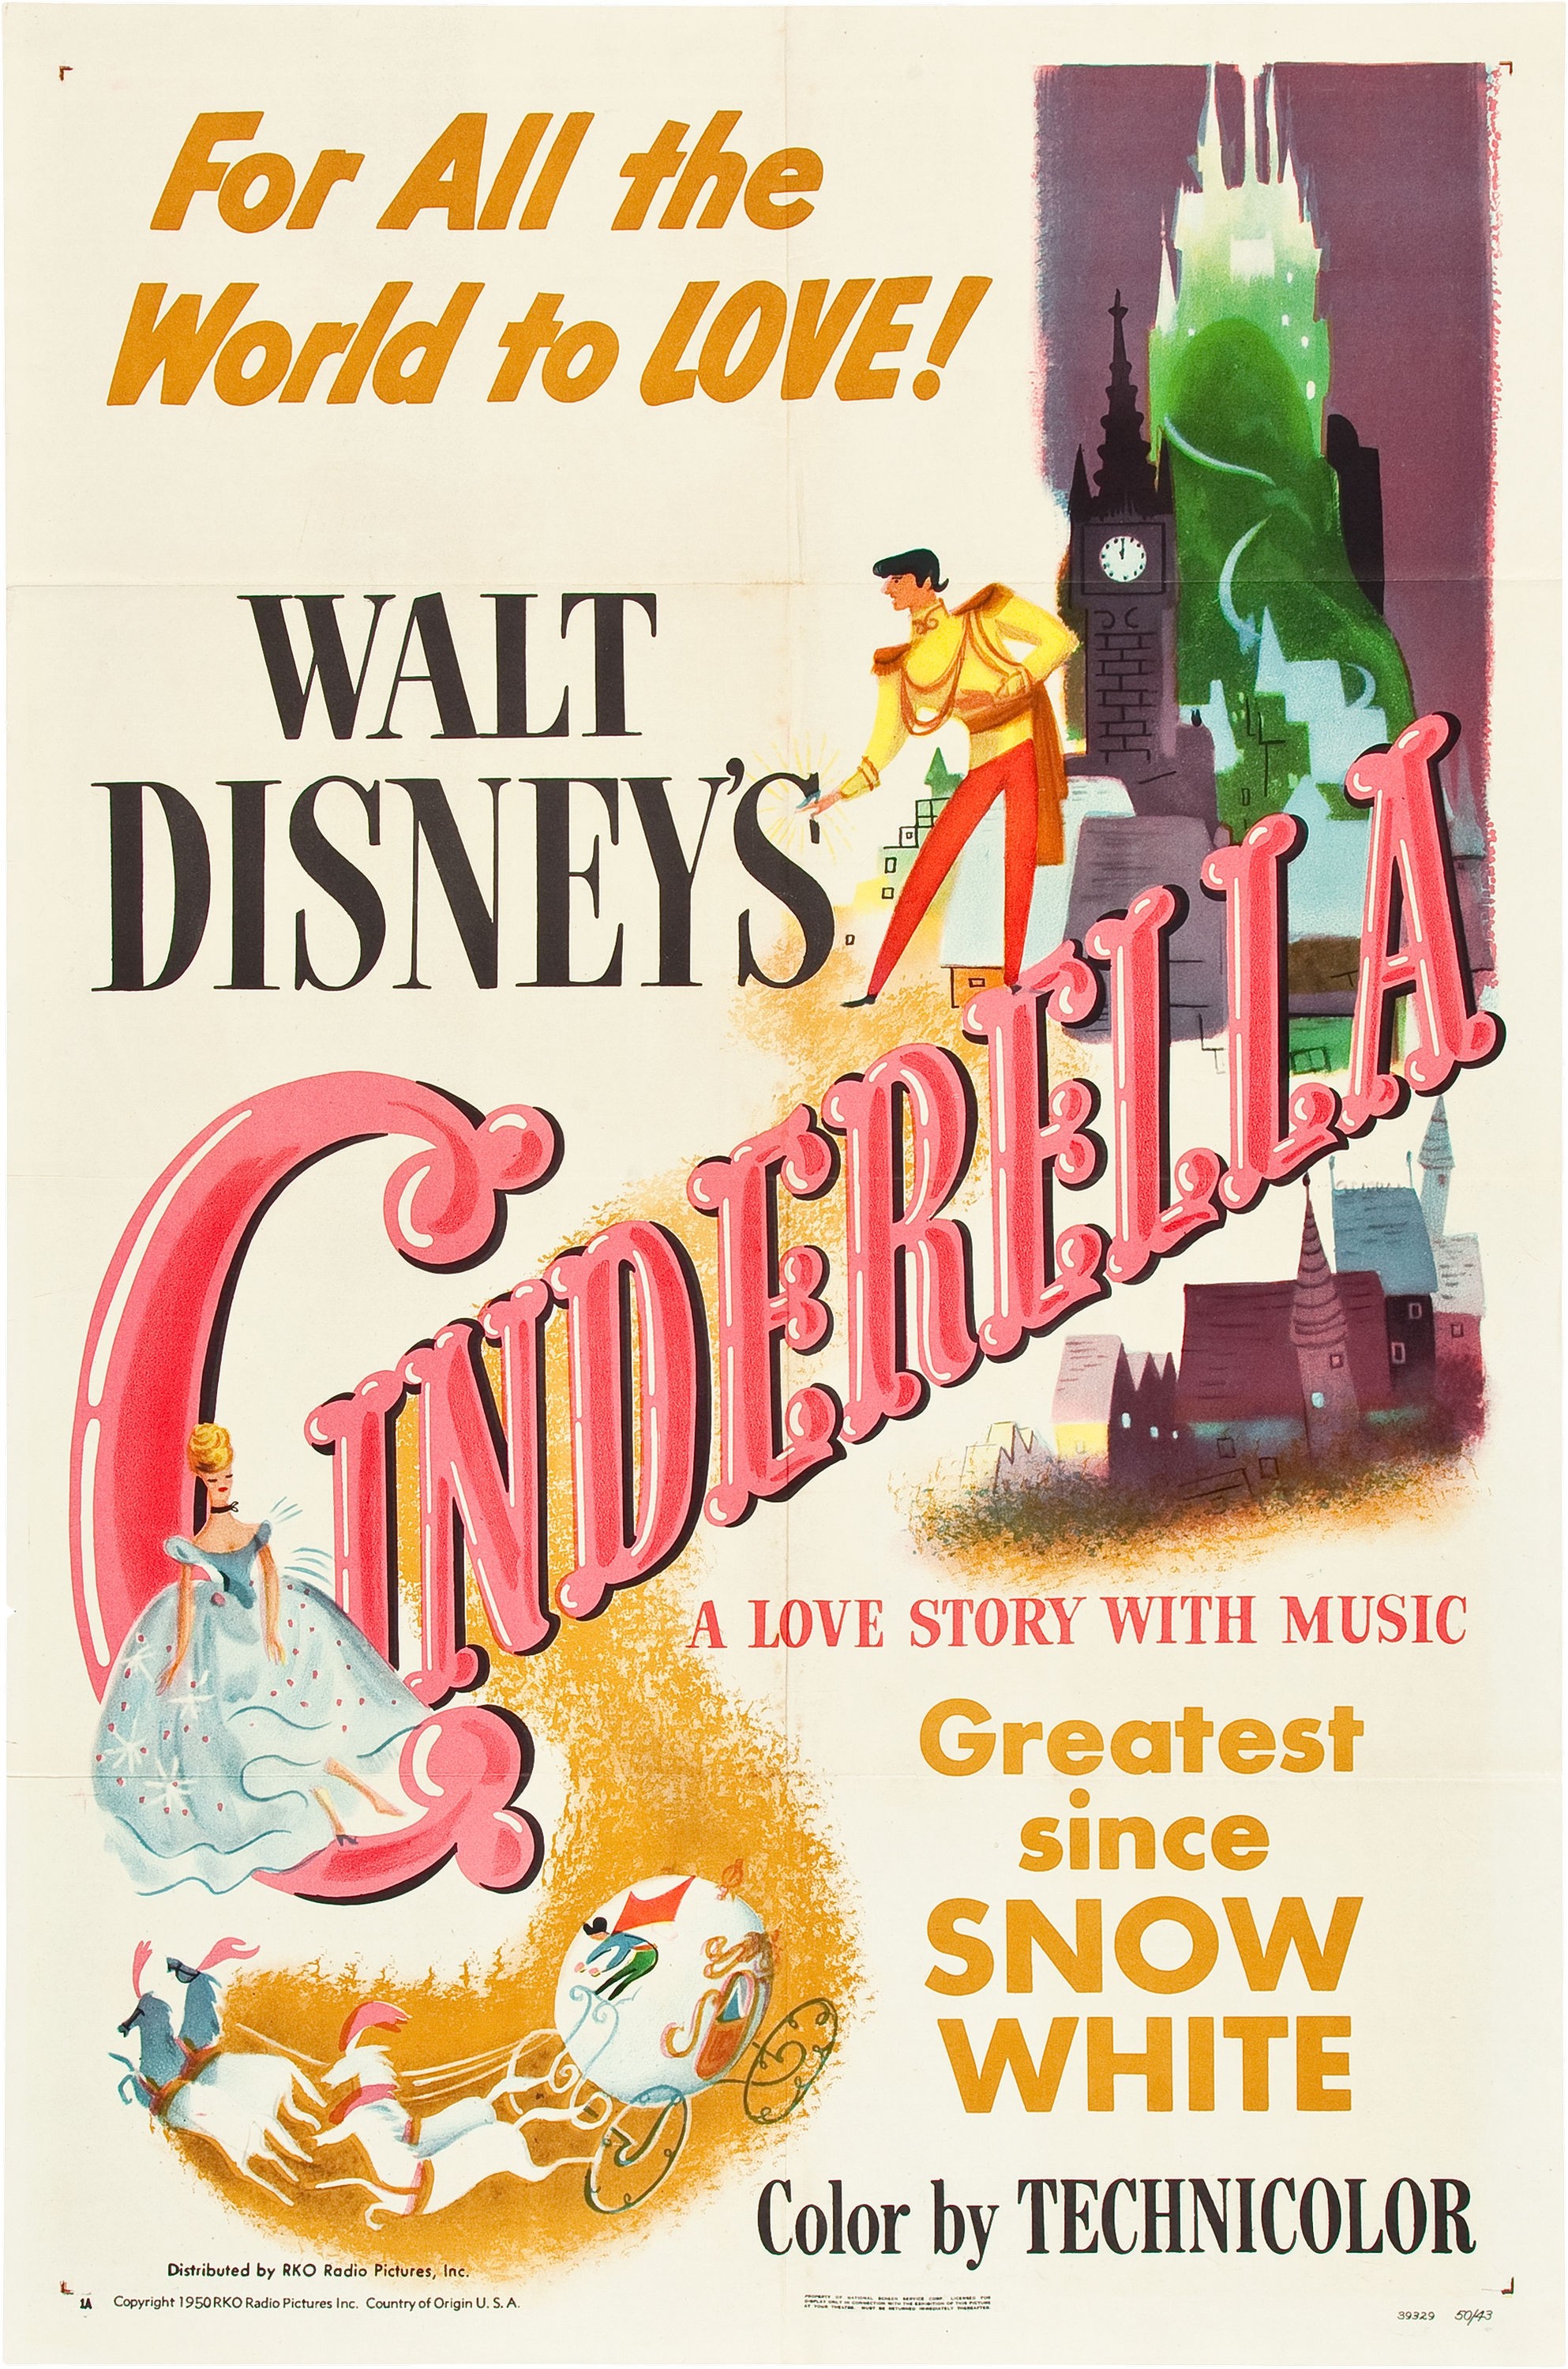 https://static.wikia.nocookie.net/disney/images/4/44/Cinderella-disney-poster.jpg/revision/latest?cb=20190822153625